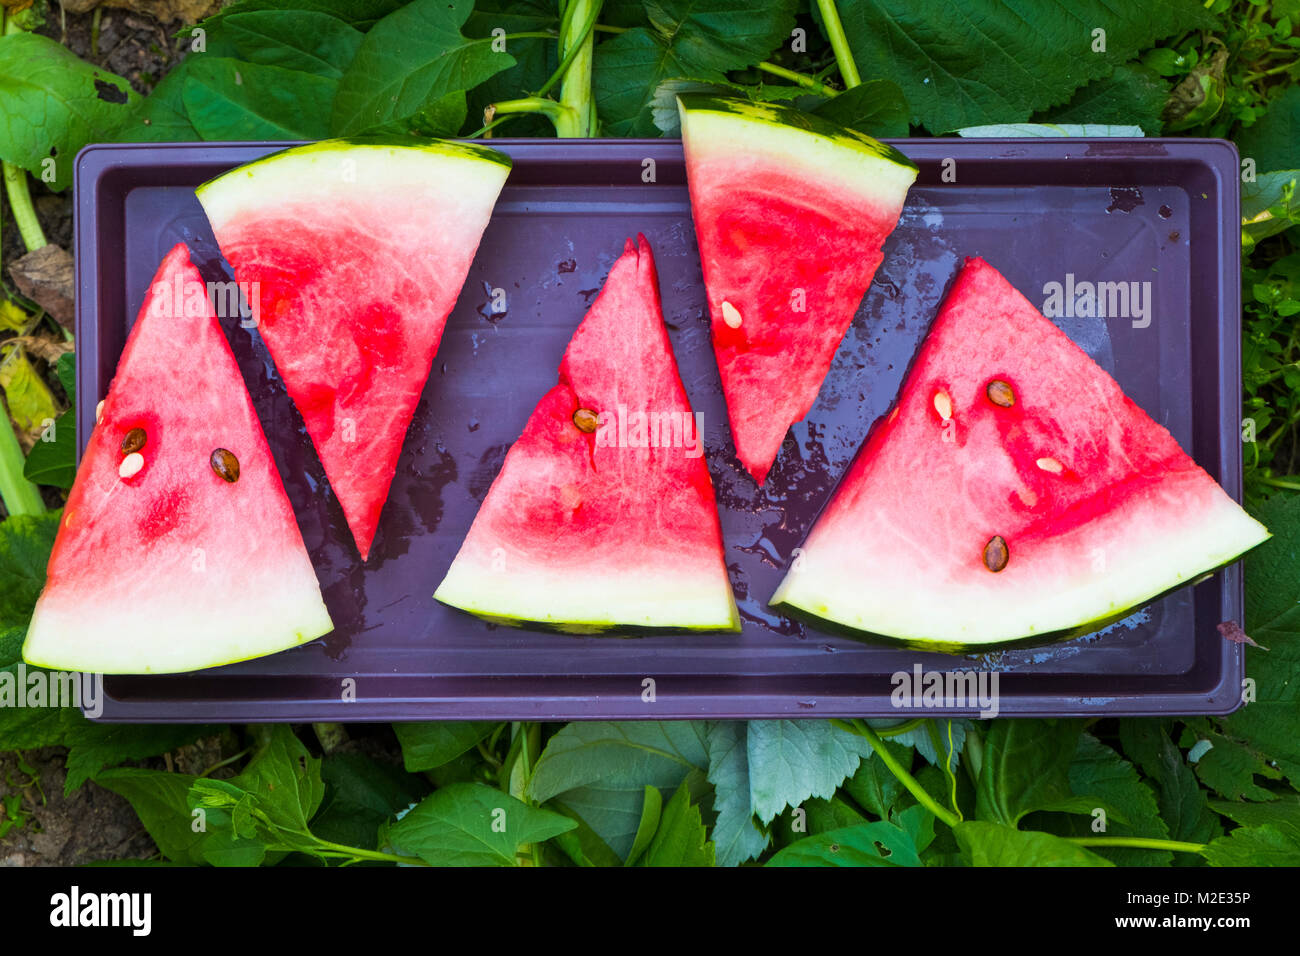 Watermelon slices on plastic tray Stock Photo